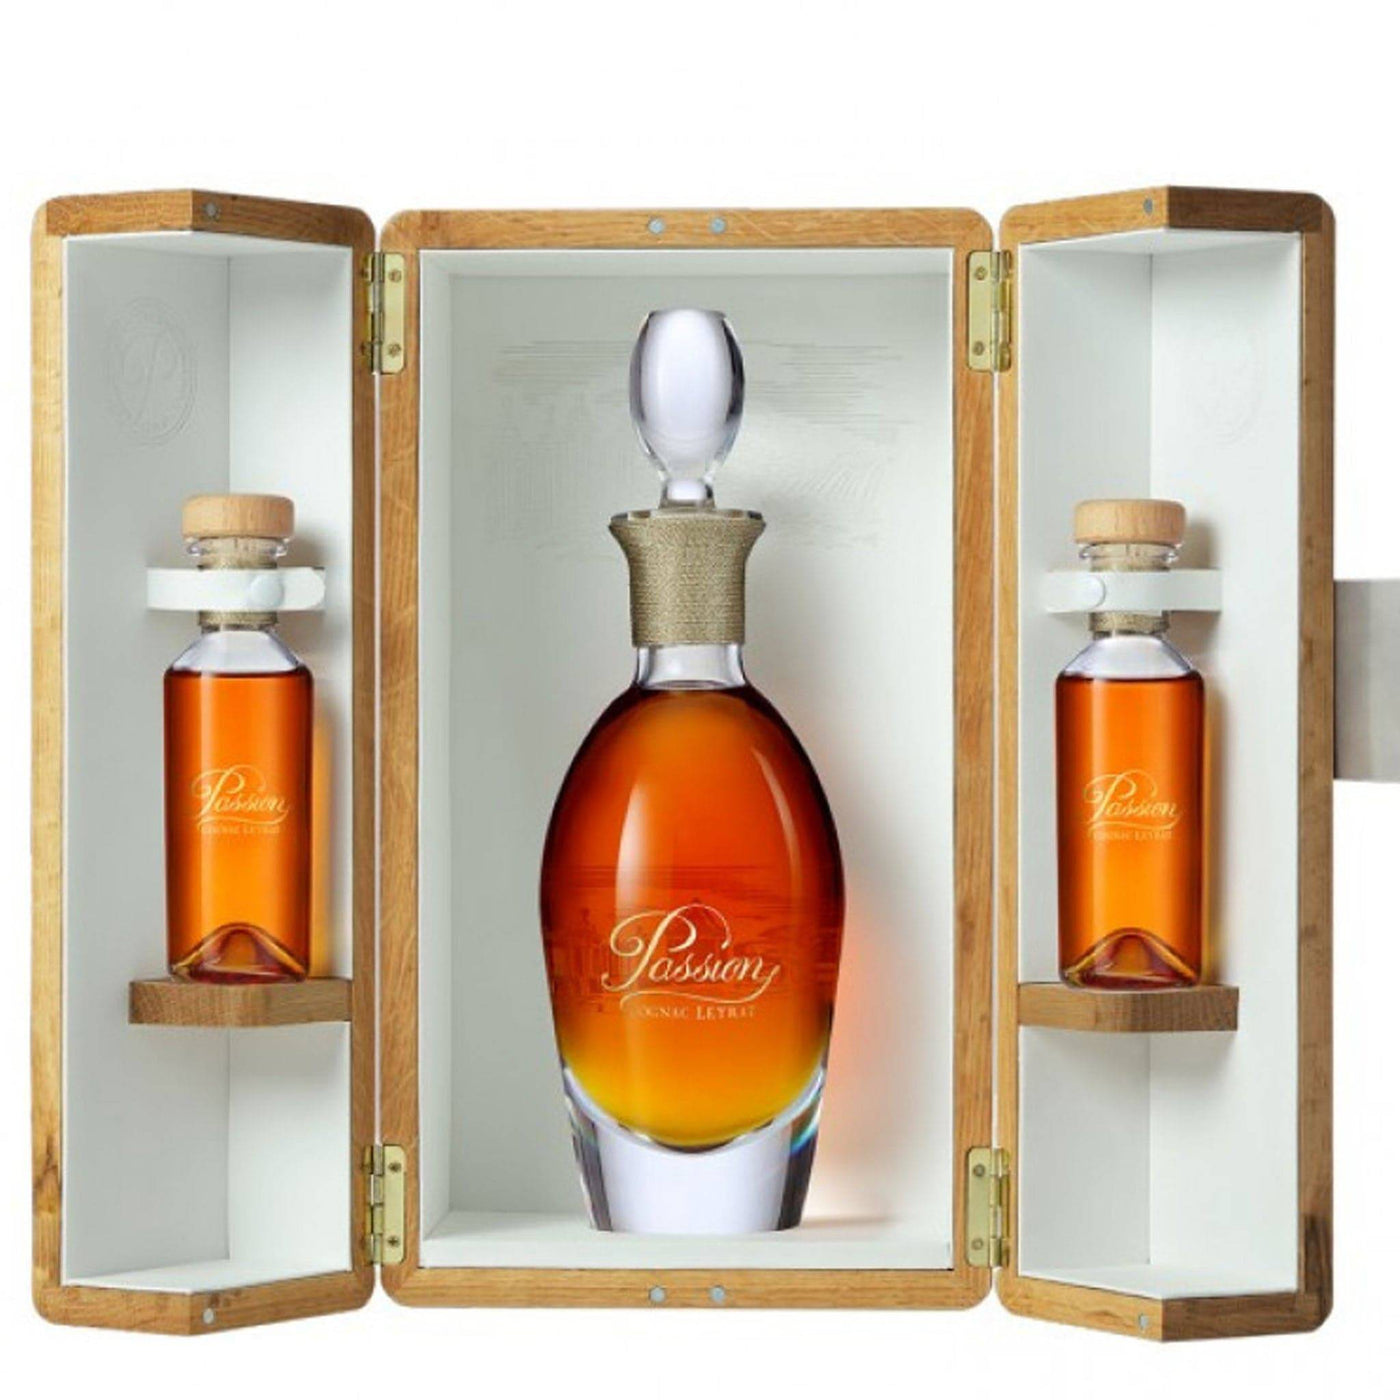 Leyrat Passion Limited Edition Cognac - Spiritly